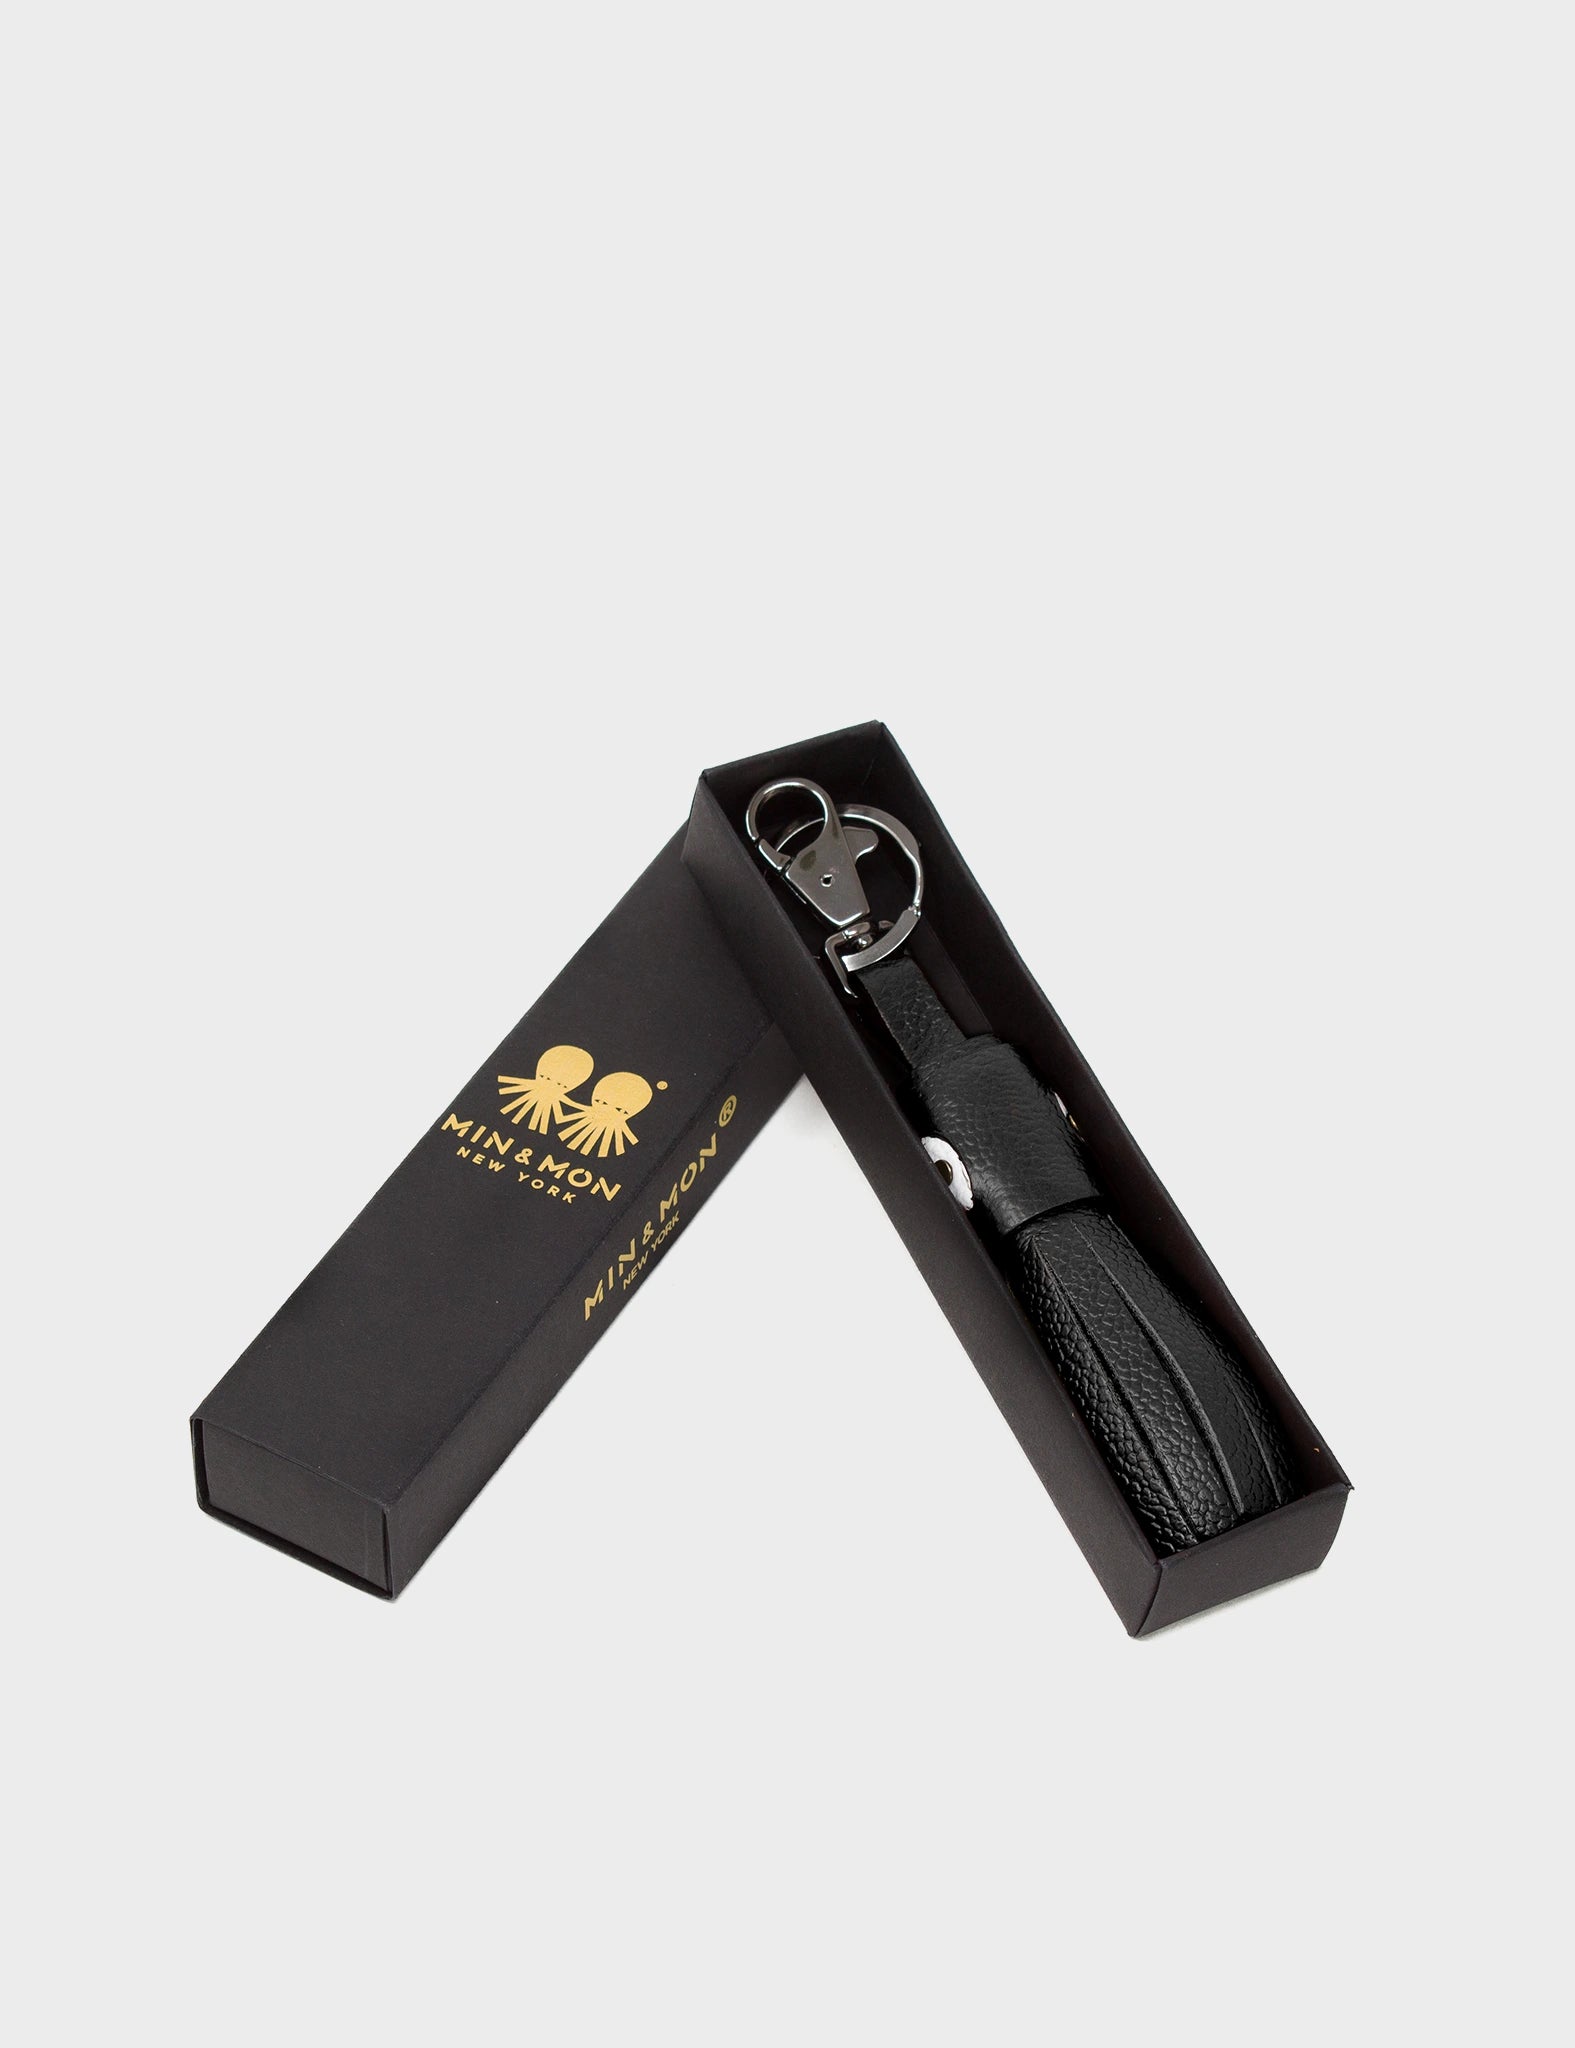 Tassel Squid Callie Marie Hue Charm - Black Leather Keychain - Box